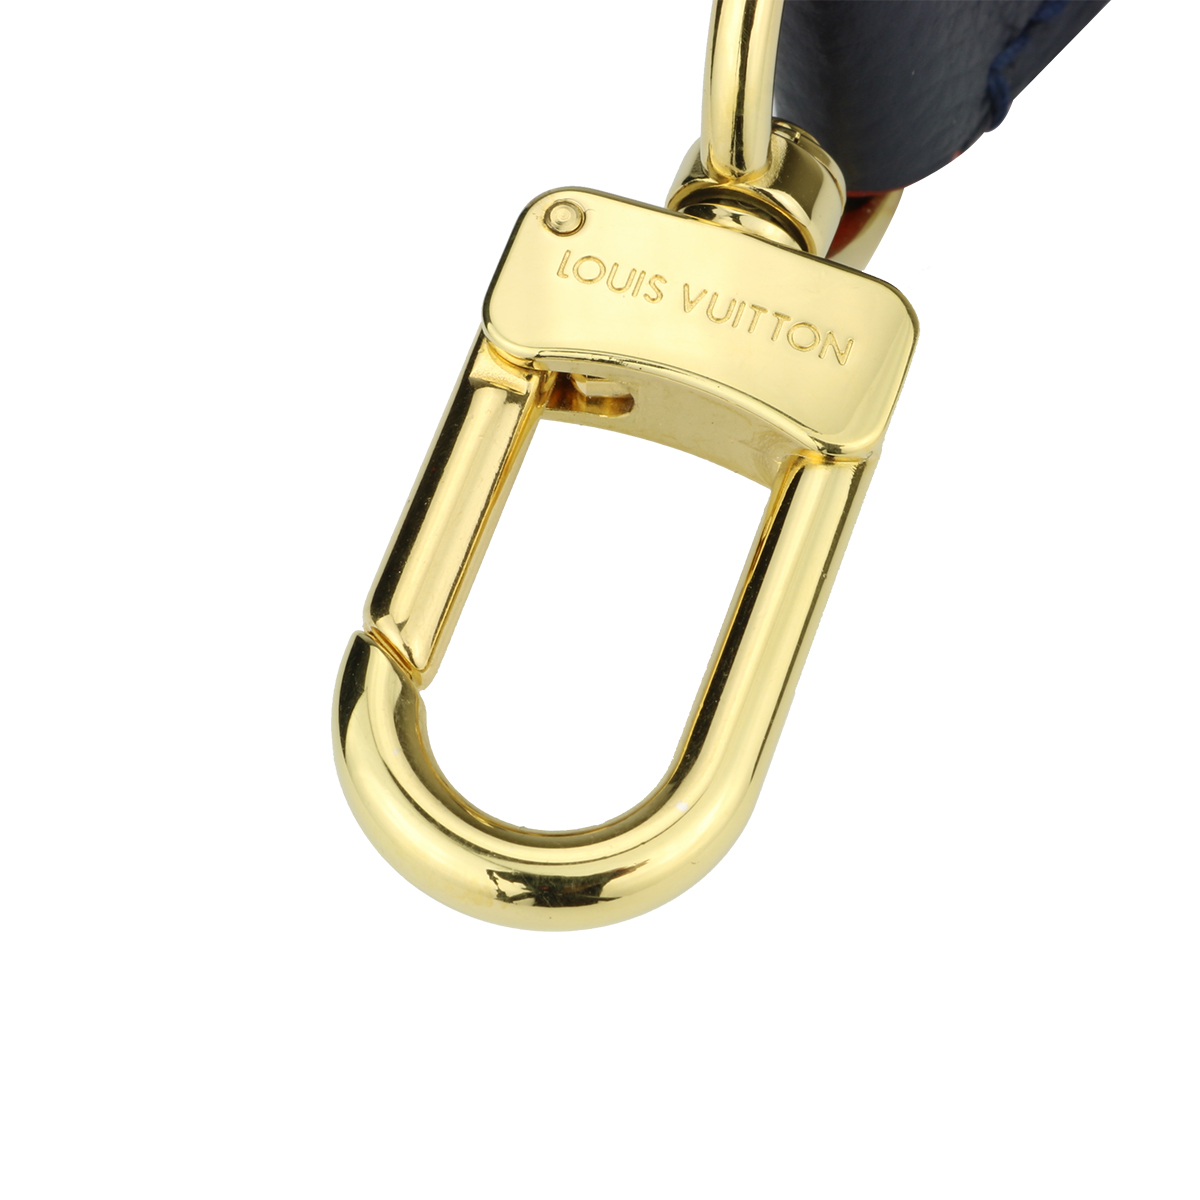 Louis Vuitton Black Empreinte Leather Melie Bag Gold Hardware